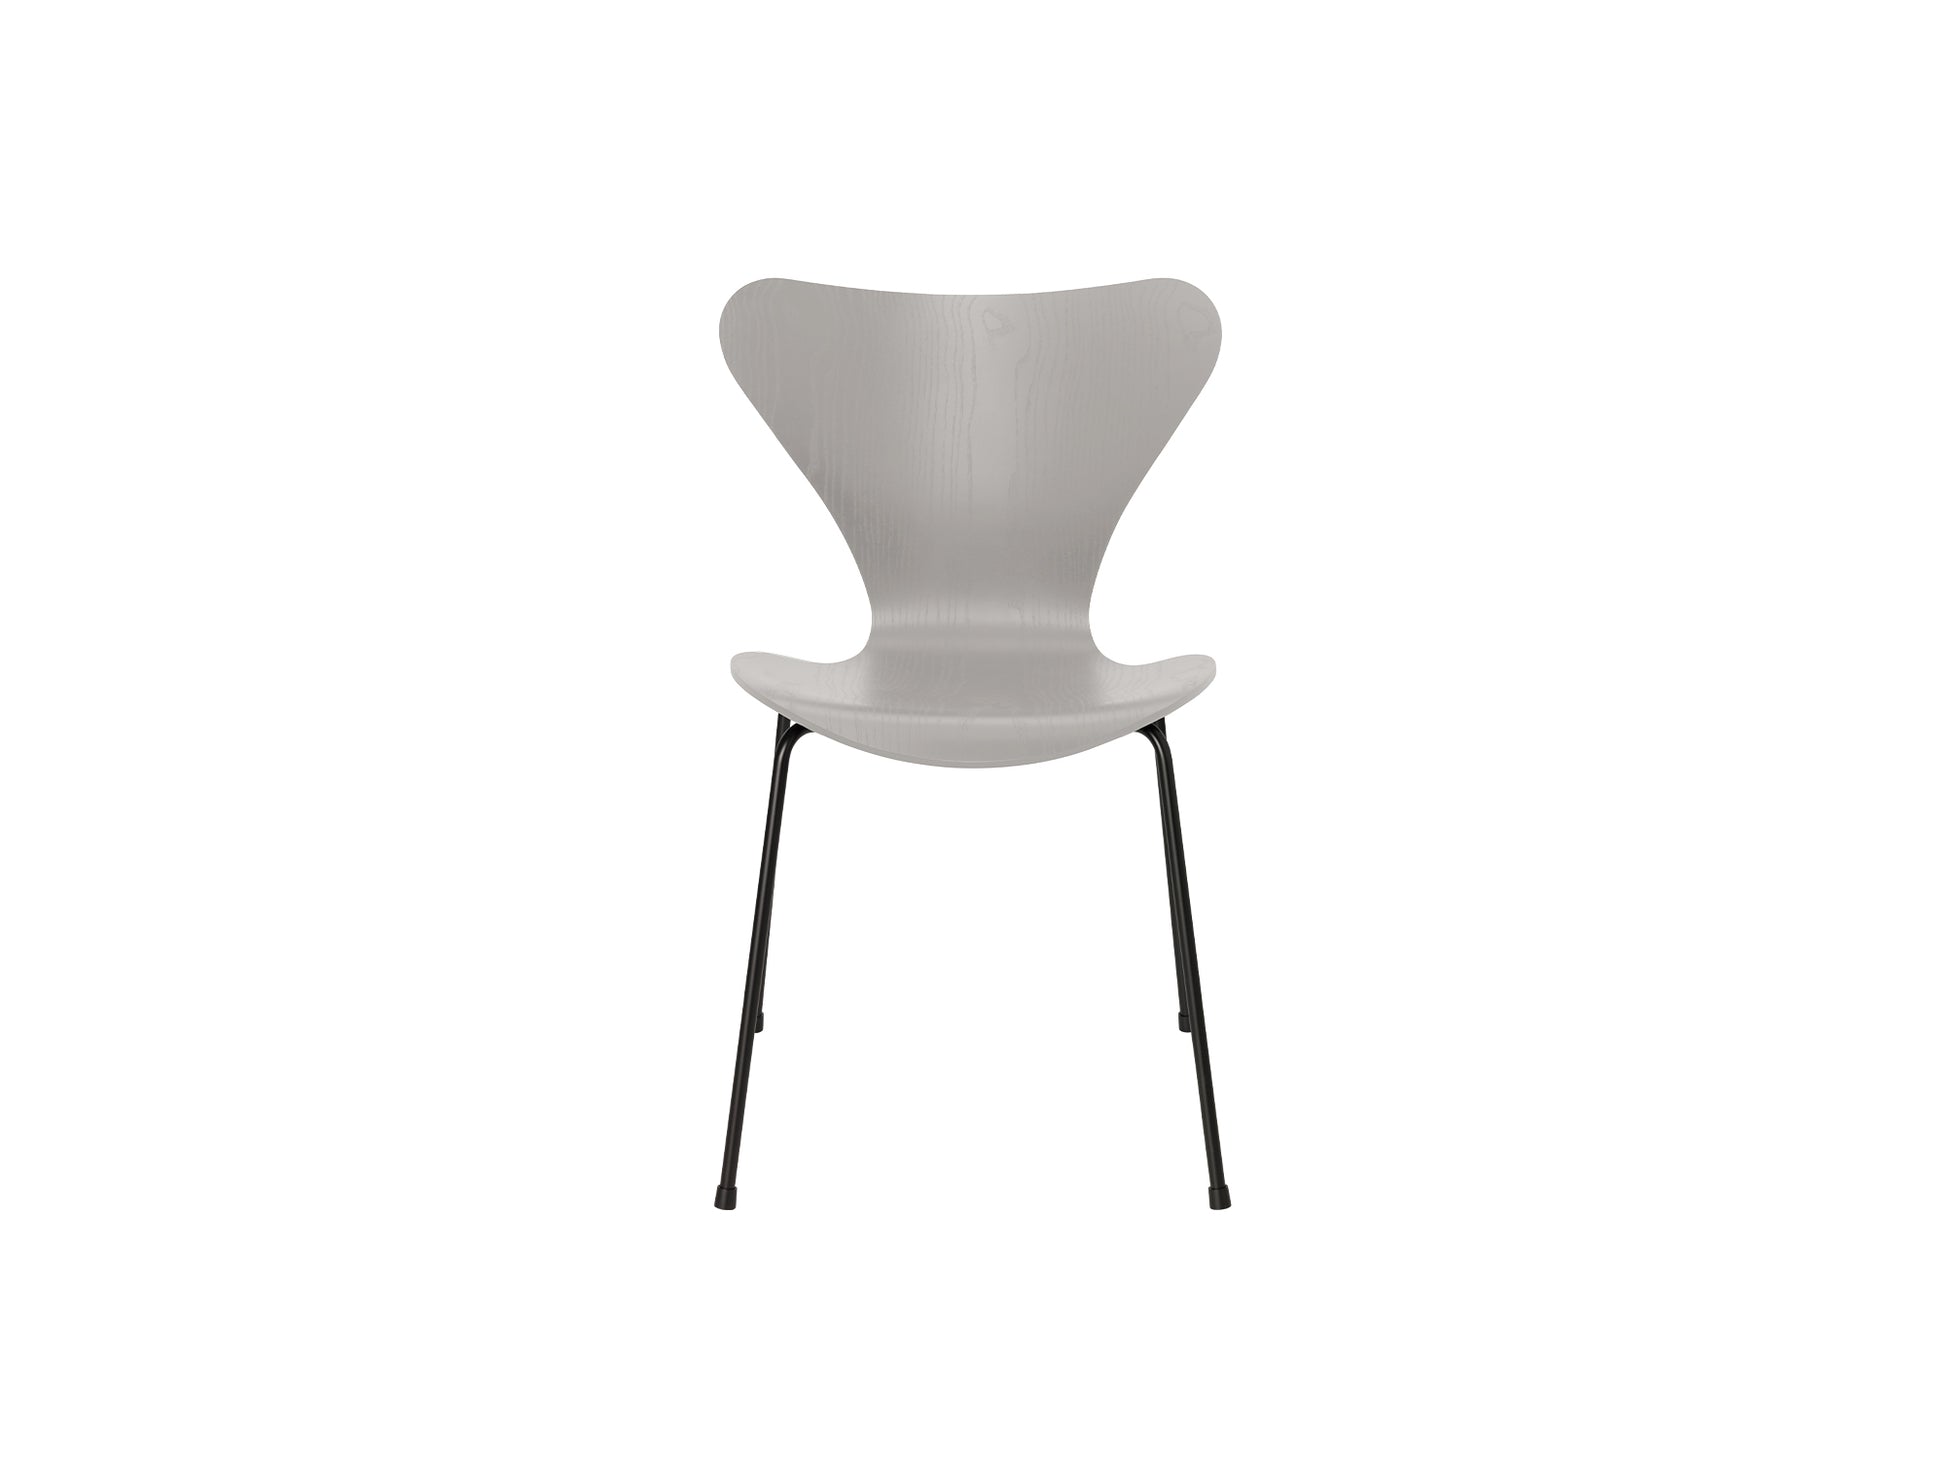 Series 7™ 3107 Dining Chair by Fritz Hansen - Nine Grey Coloured Ash Veneer Shell / Black Steel